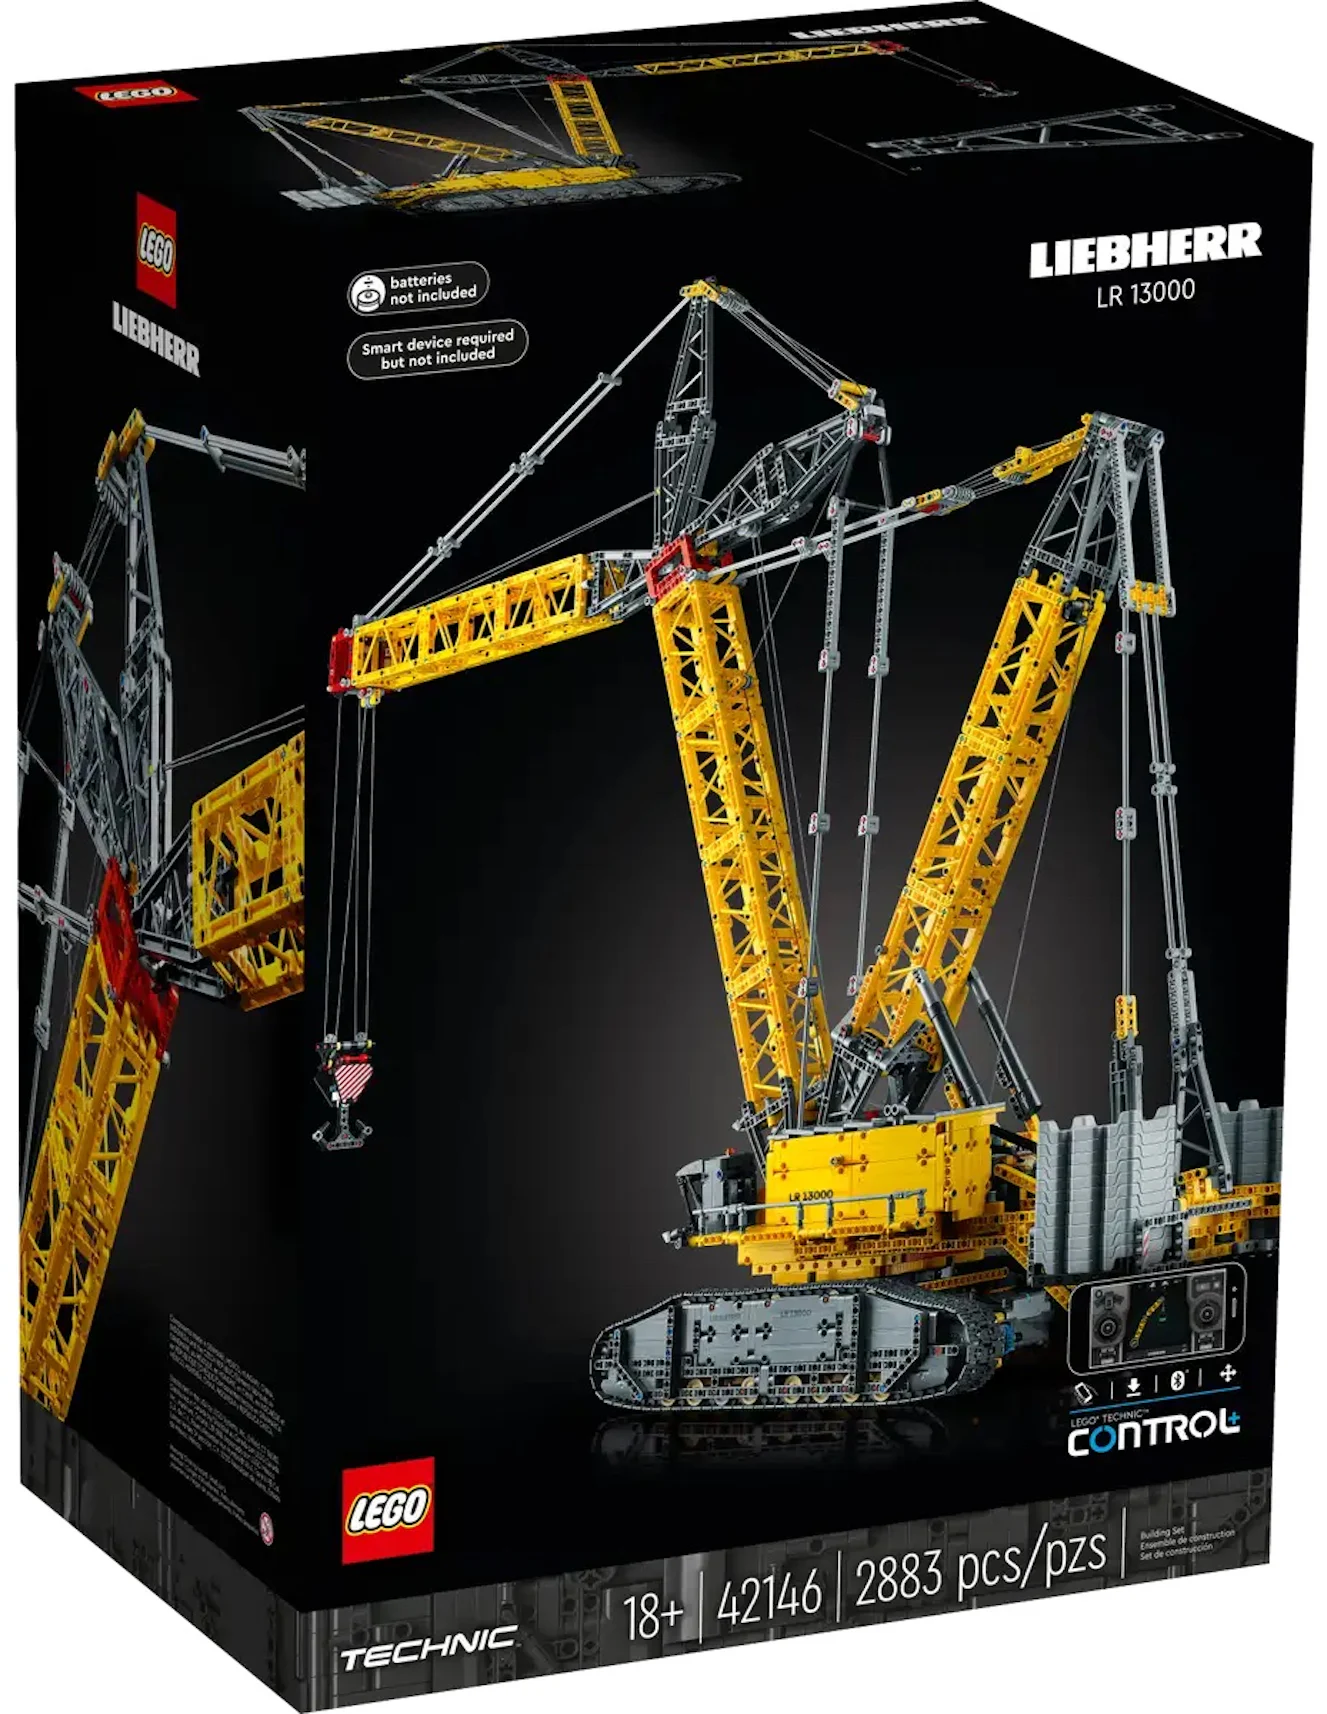 LEGO Technic Liebherr Crawler Crane LR 13000 Set 42146 - US